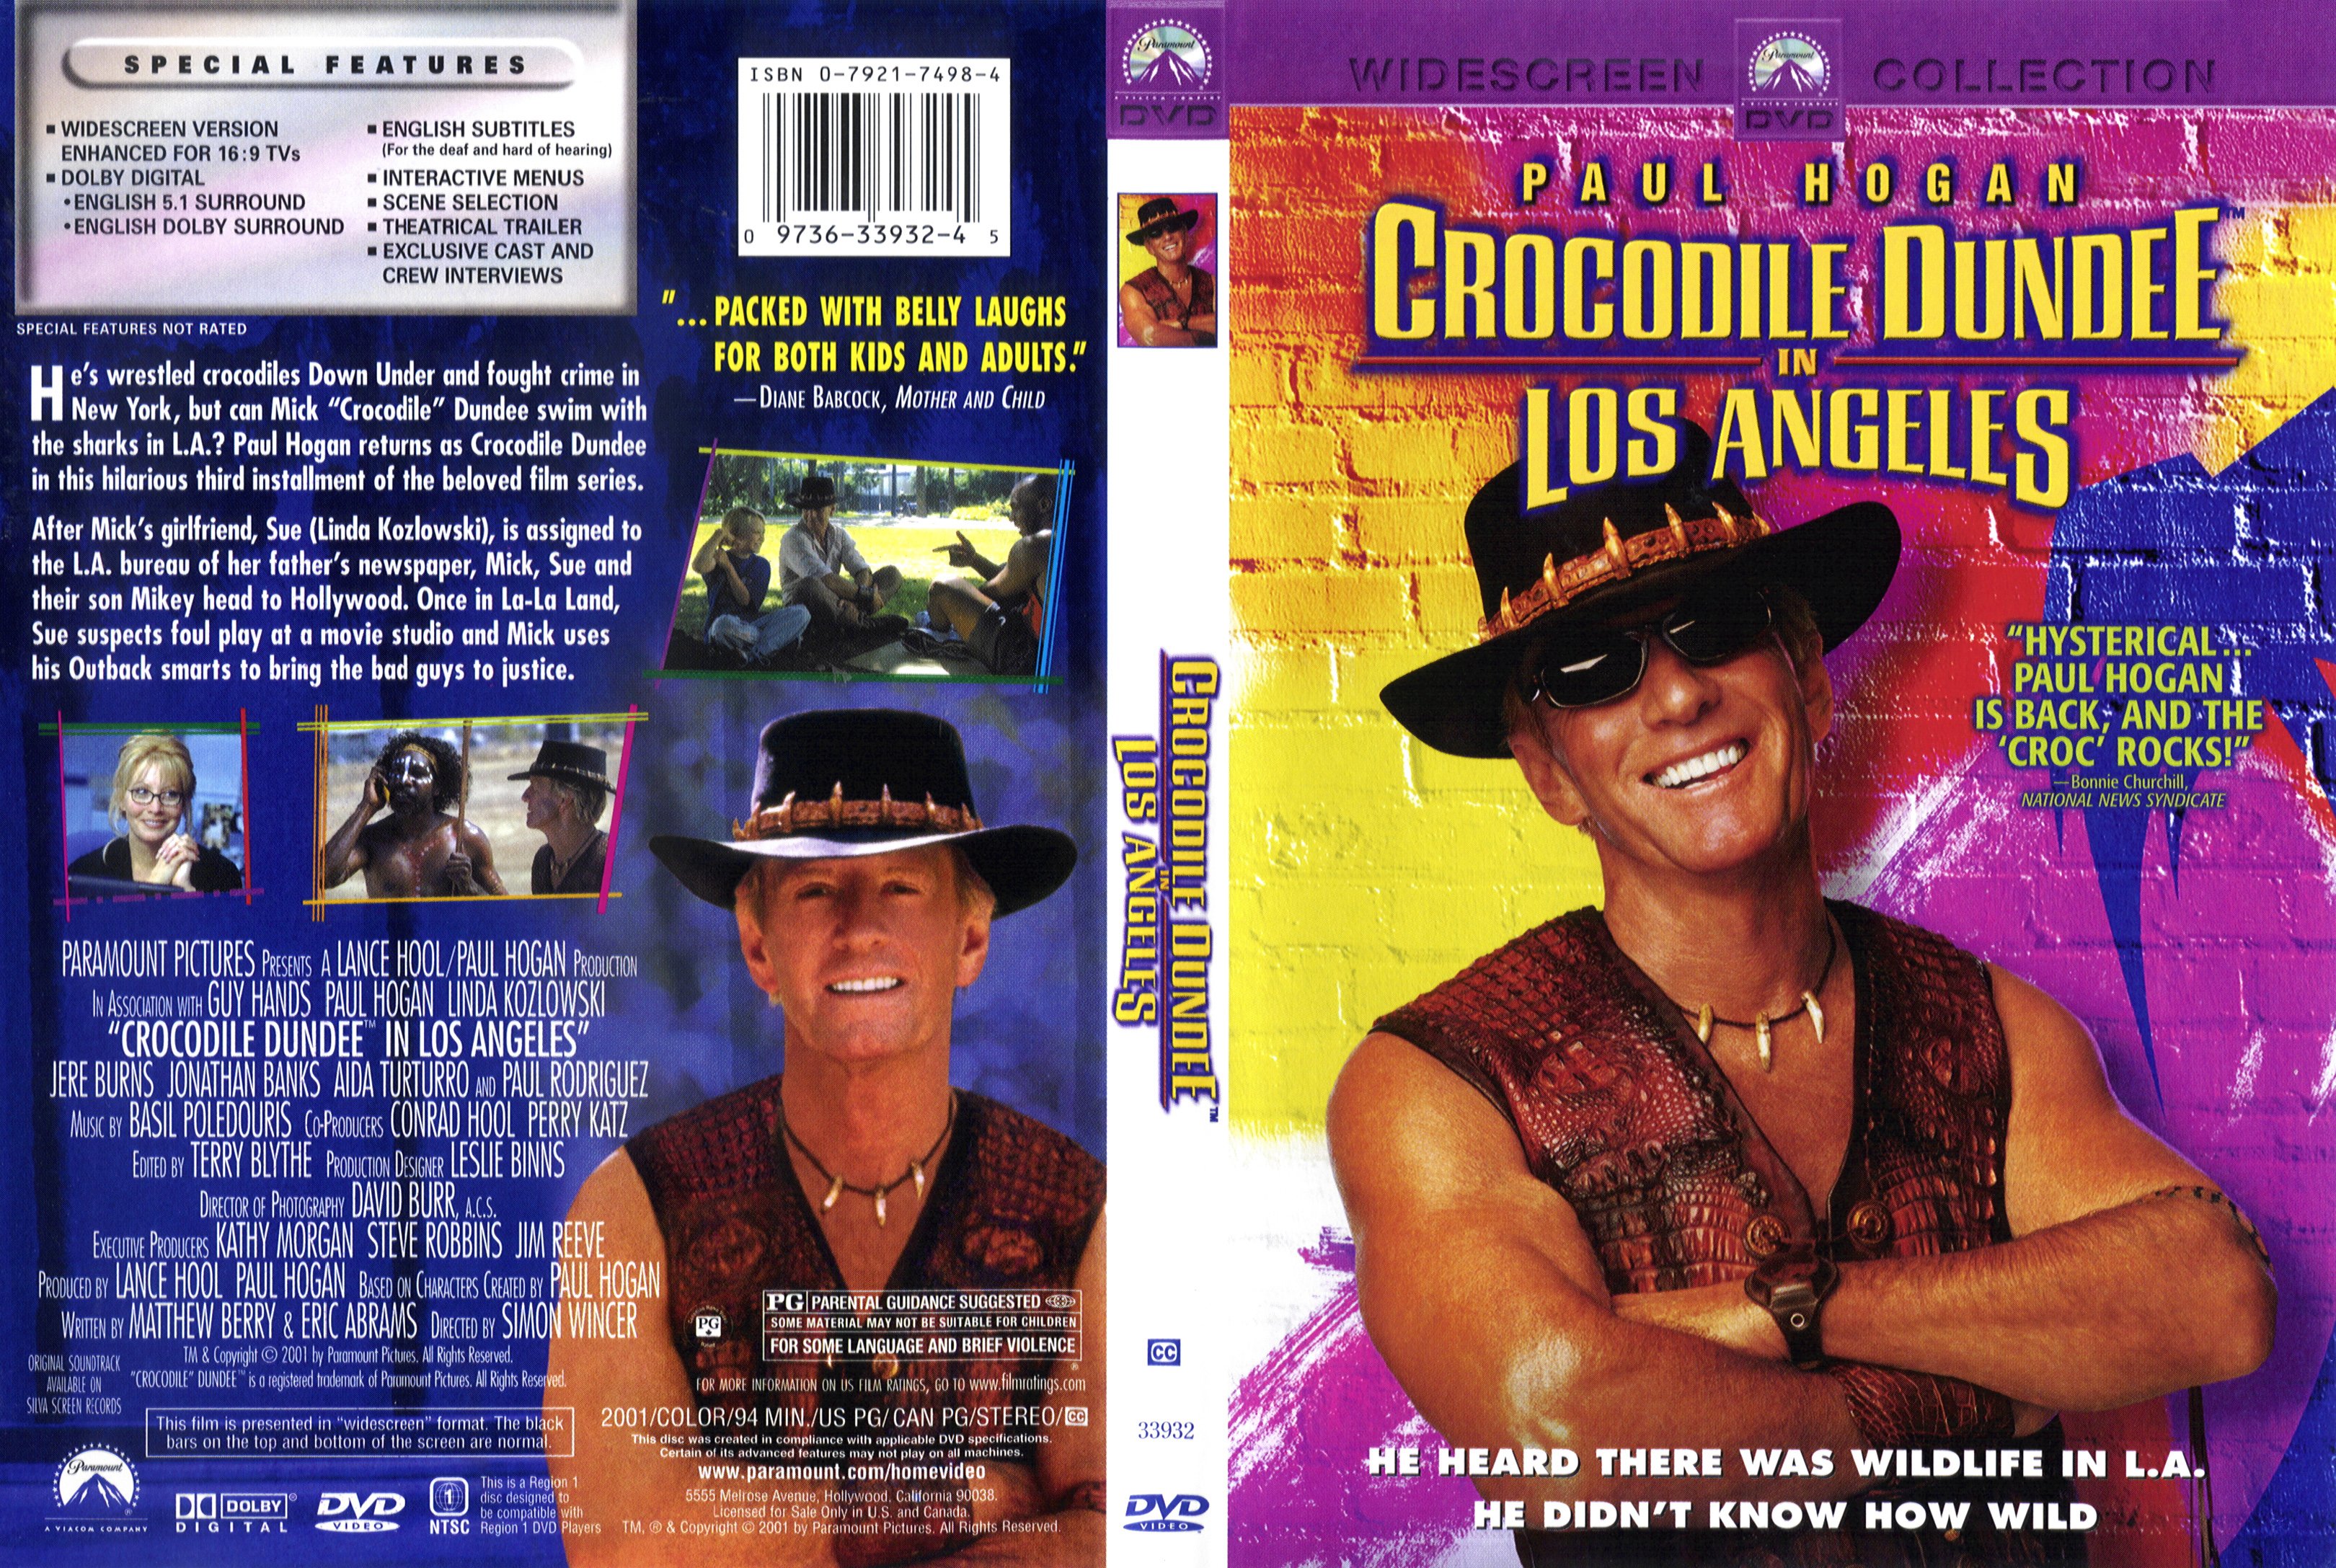 Крокодил данди 2 3. Крокодил Данди (3) в Лос Анджелесе (2001). Крокодил Данди 2001 Постер. Крокодил Данди DVD. Крокодил Данди трилогия двд обложка.